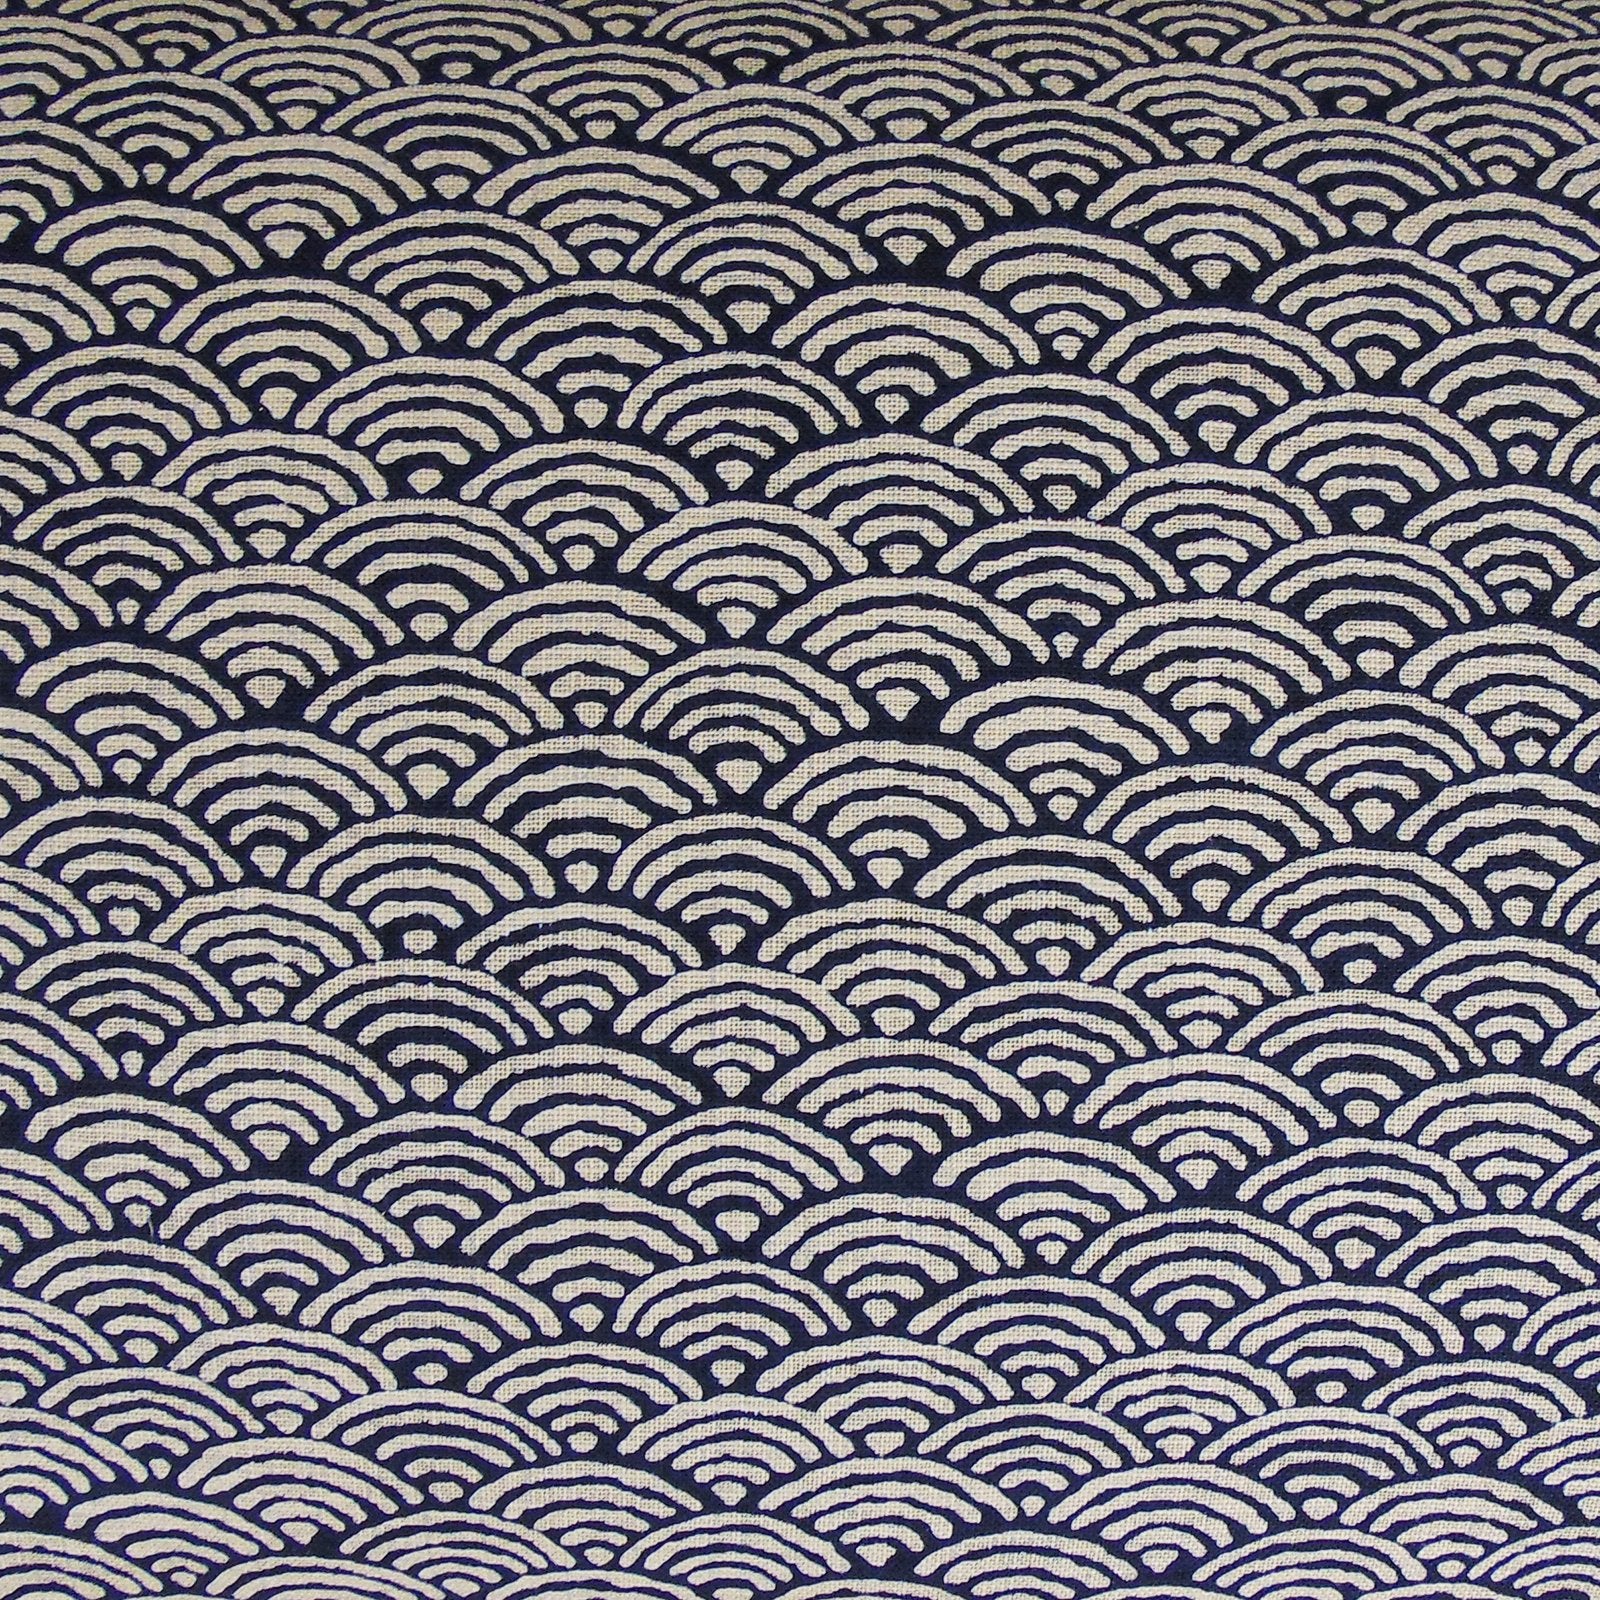 Imported Japanese Fabric - Seikai Ha Navy #2_Fabric_Imported from Japan_100% Cotton_Japanese Sleep System